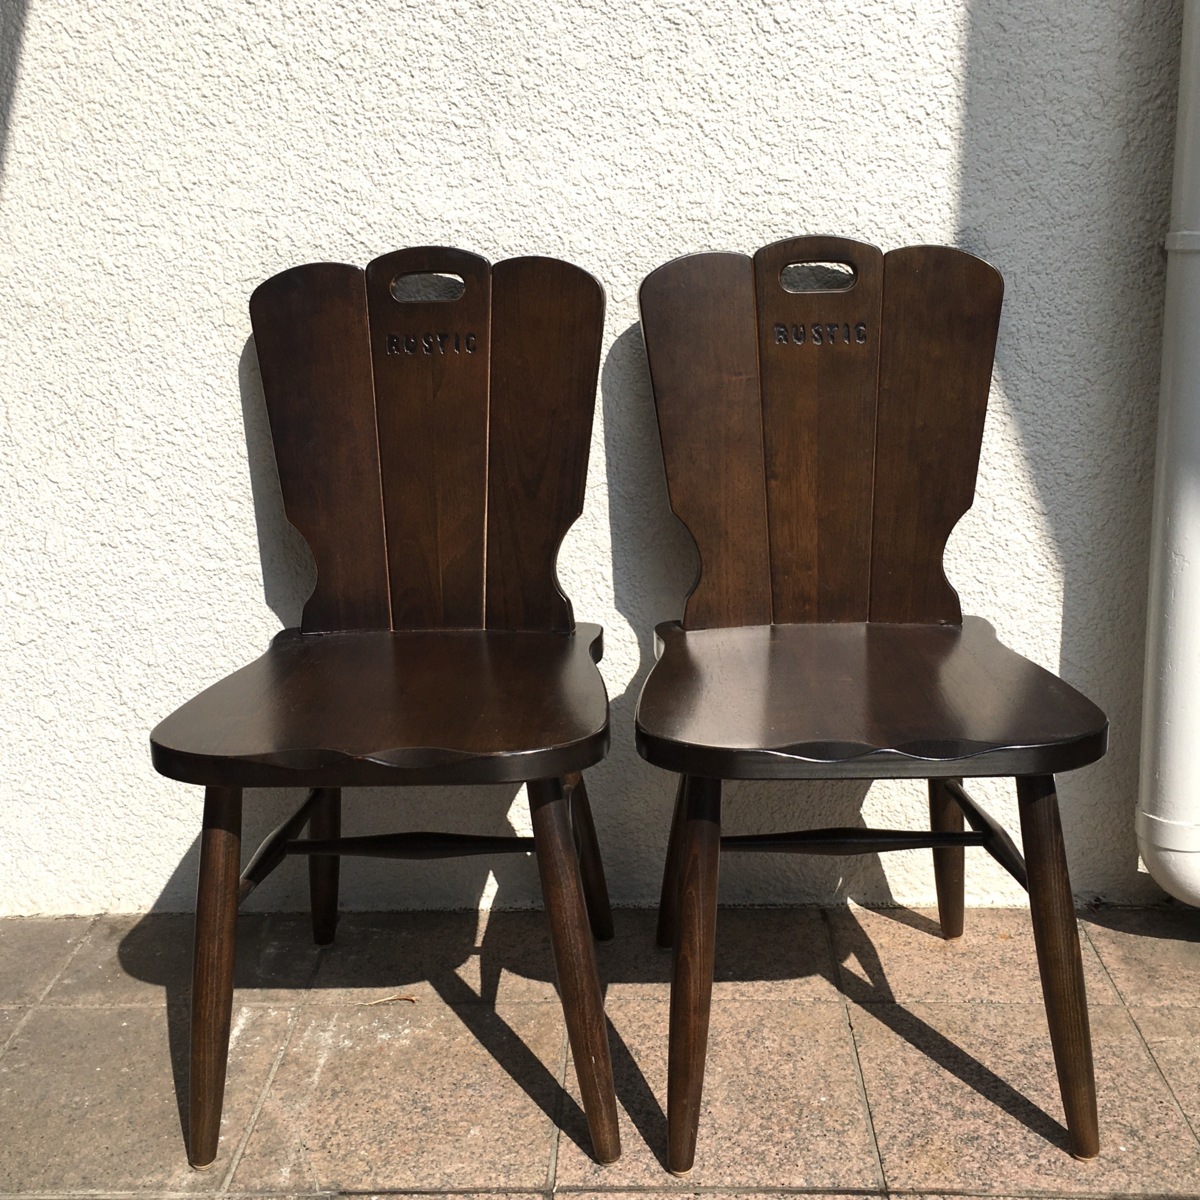 karimoku カリモク RUSTIC ルスティック ダイニングチェア 2脚 木製 椅子のお買取をさせていただきました。 | 出張買取なら錬金堂